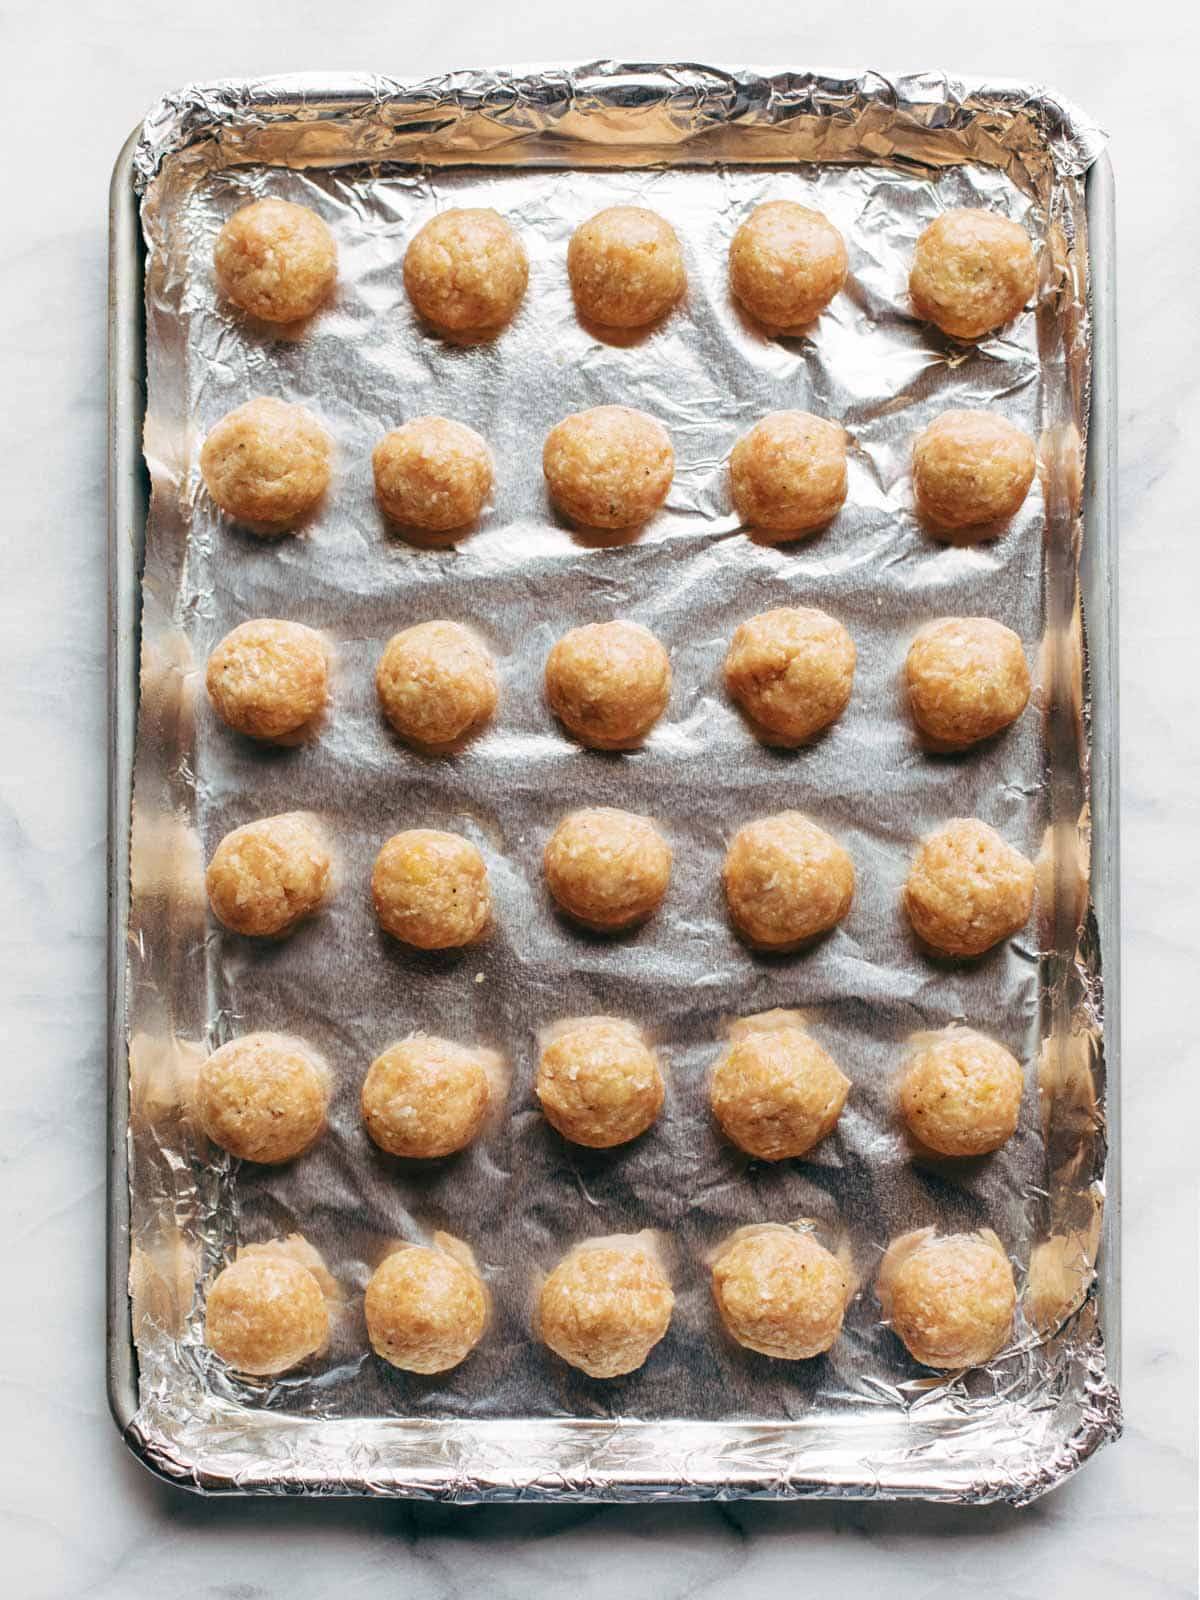 Unbaked Chicken Meatballs on a sheet pan.